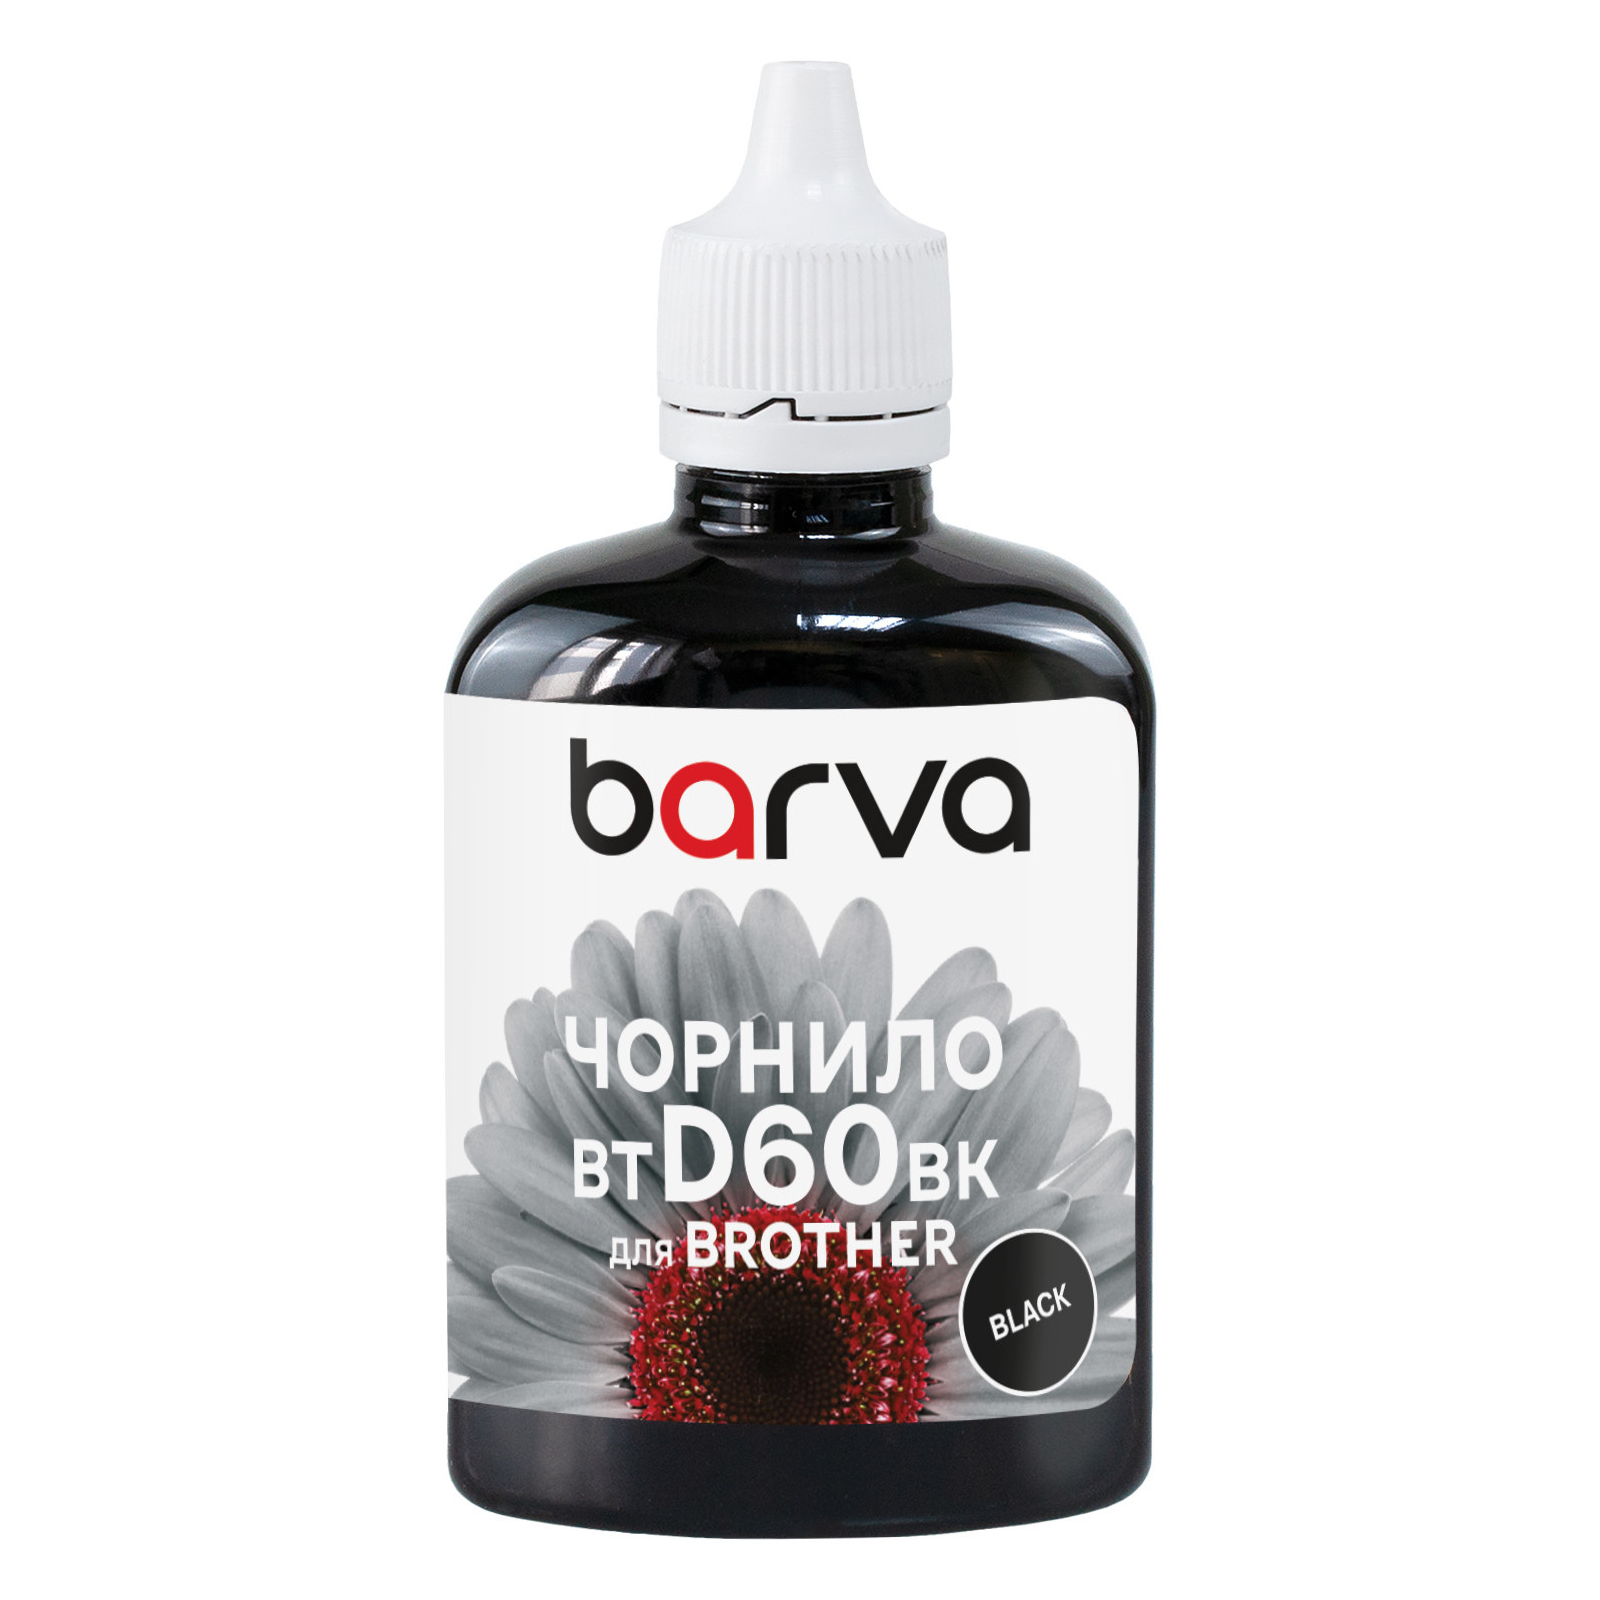 Чернила Barva Brother BTD60BK 1л (BBTD60-757)